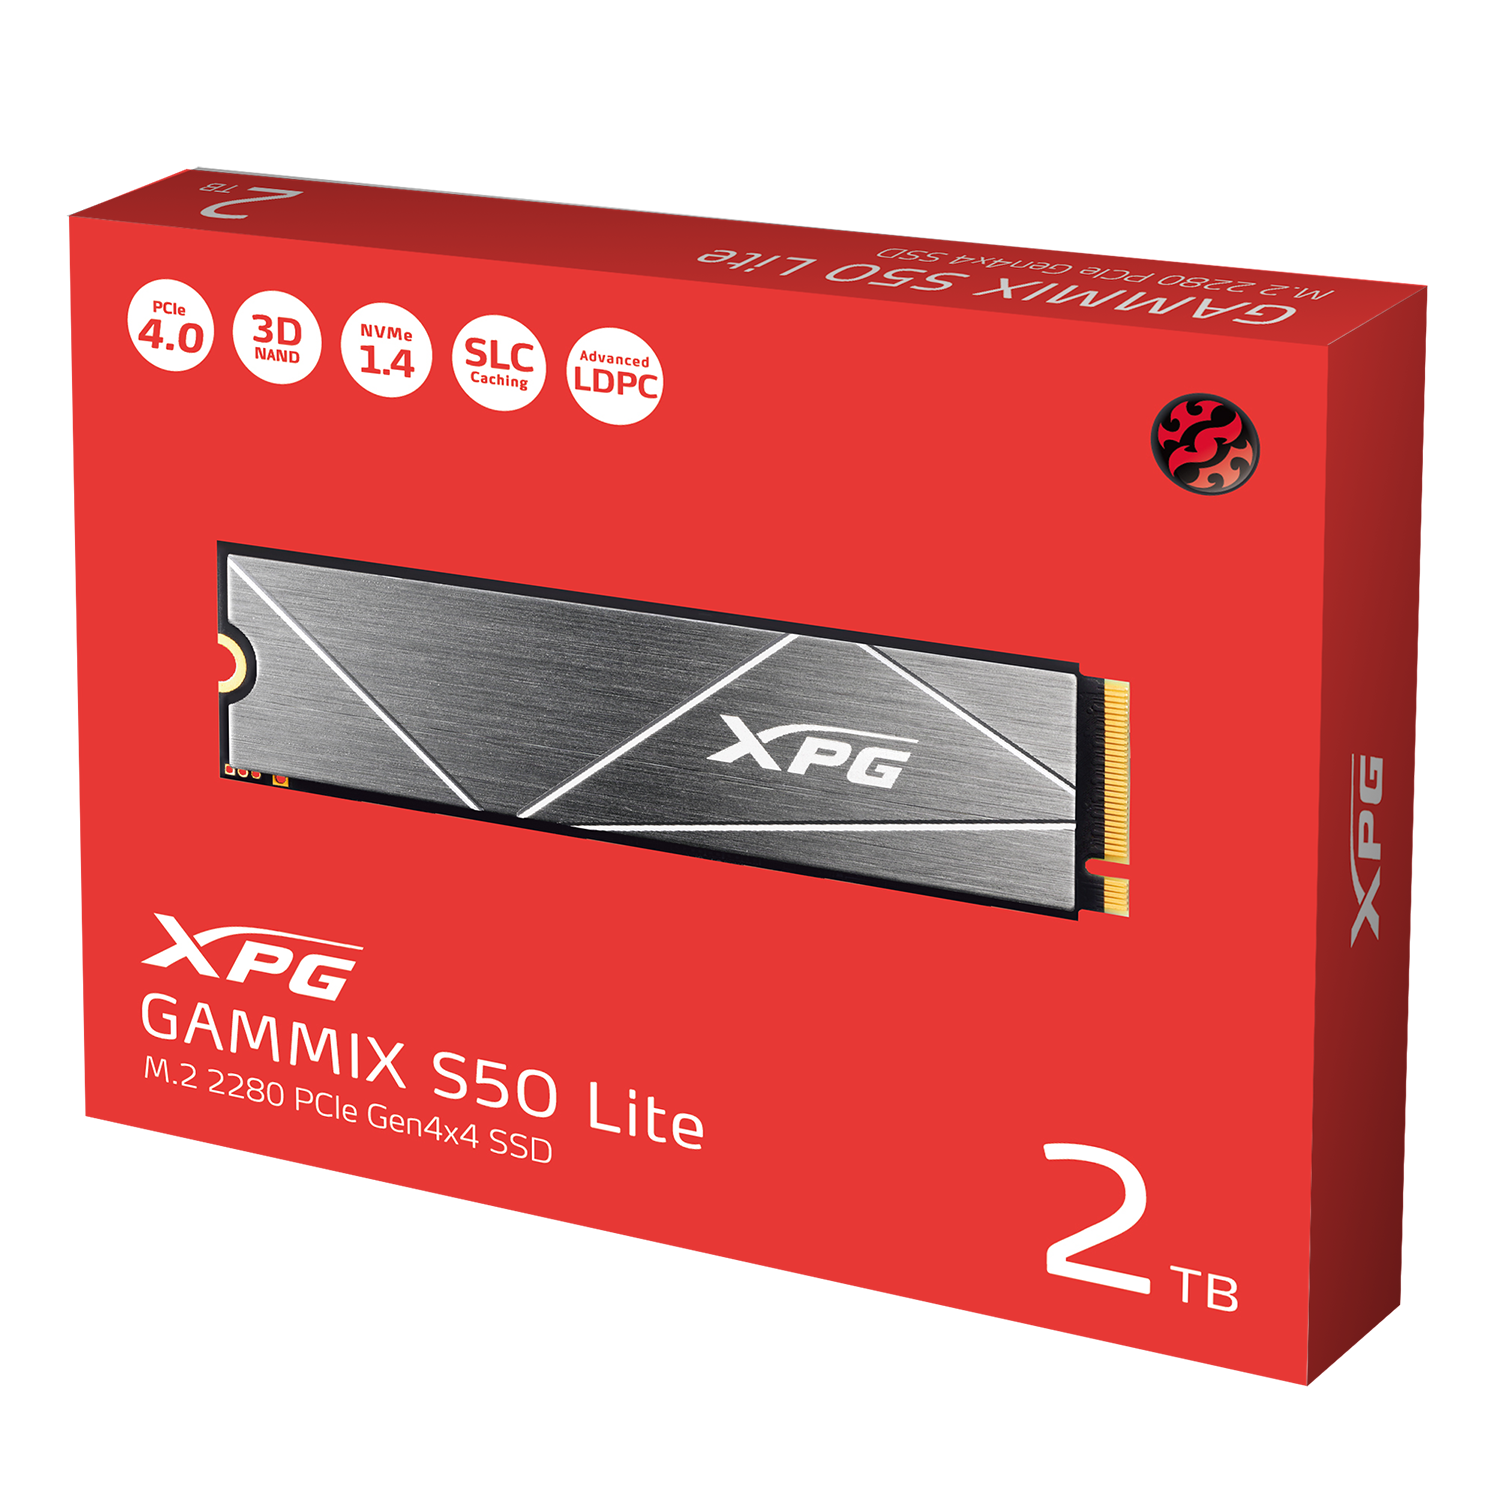 bind Third telex ADATA XPG Launches a PCIe 4.0 x4 NVMe SSD for Notebooks: Gammix S50 Lite